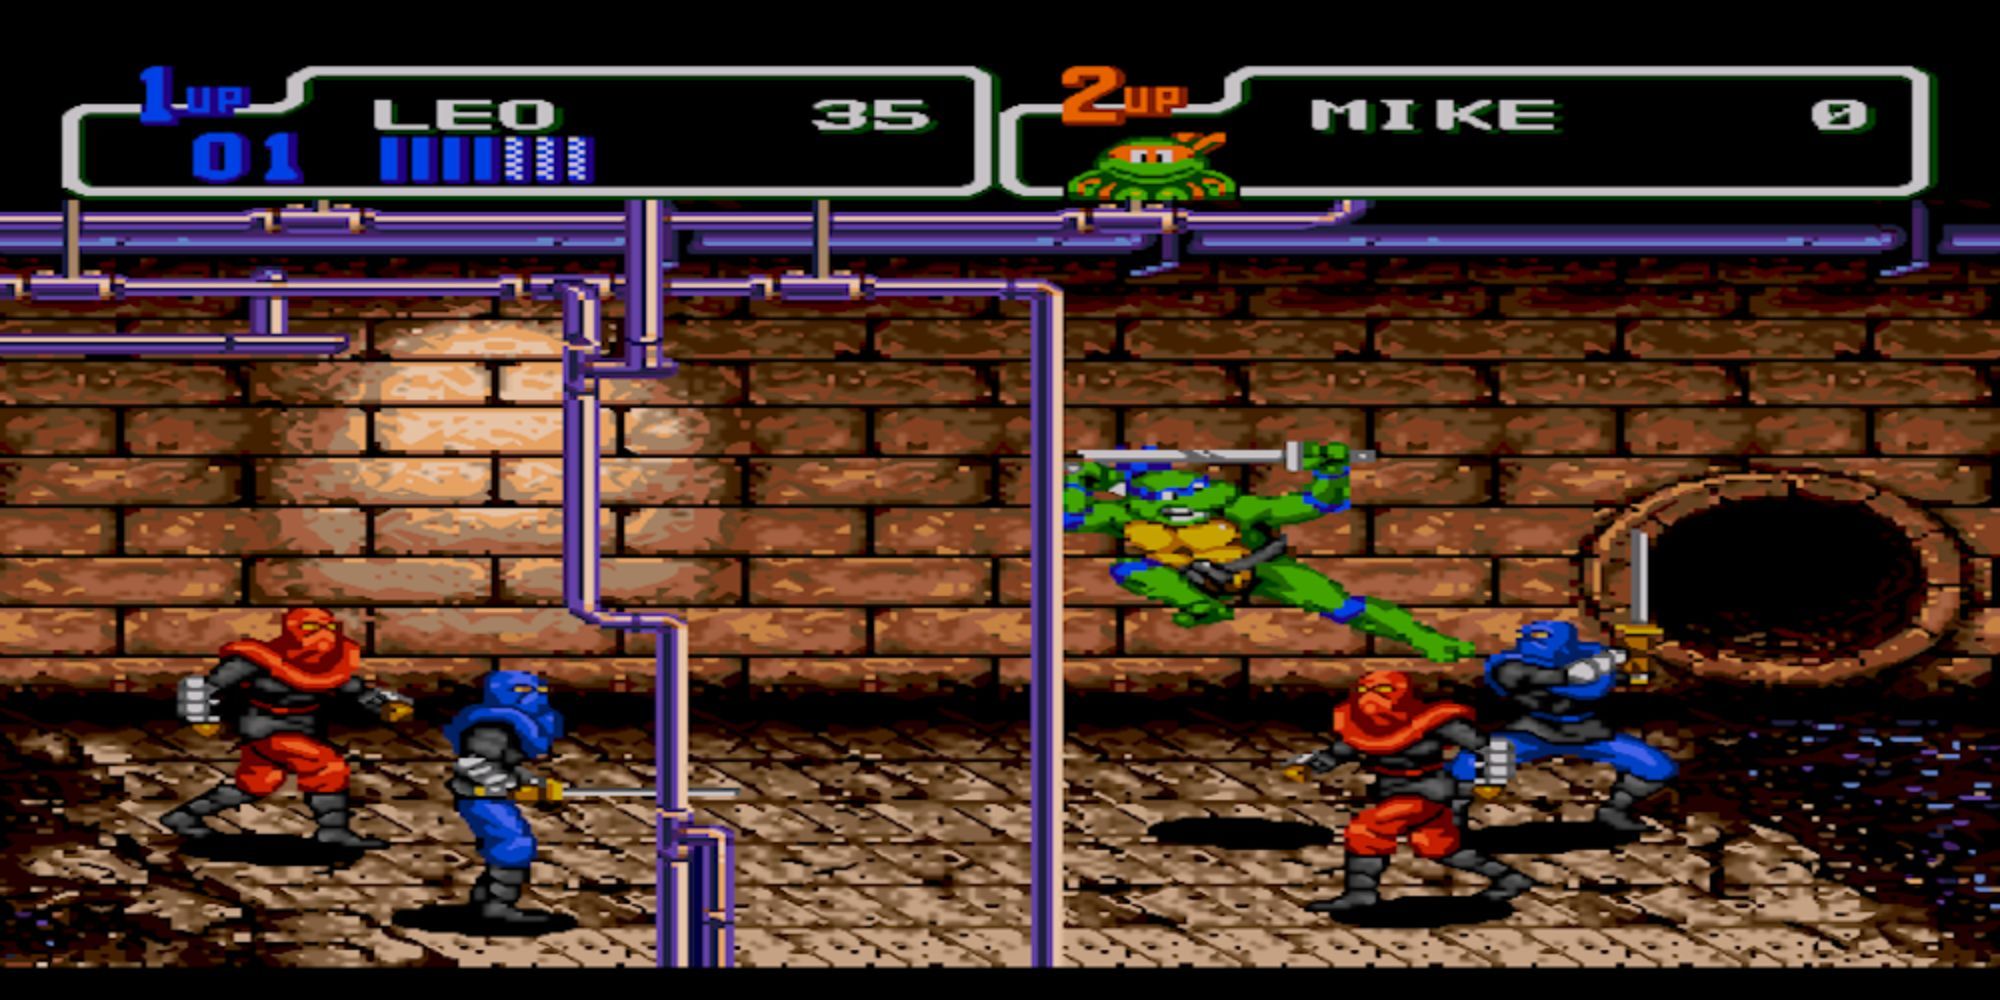 Leonardo kicks a group of Foot Clan ninjas